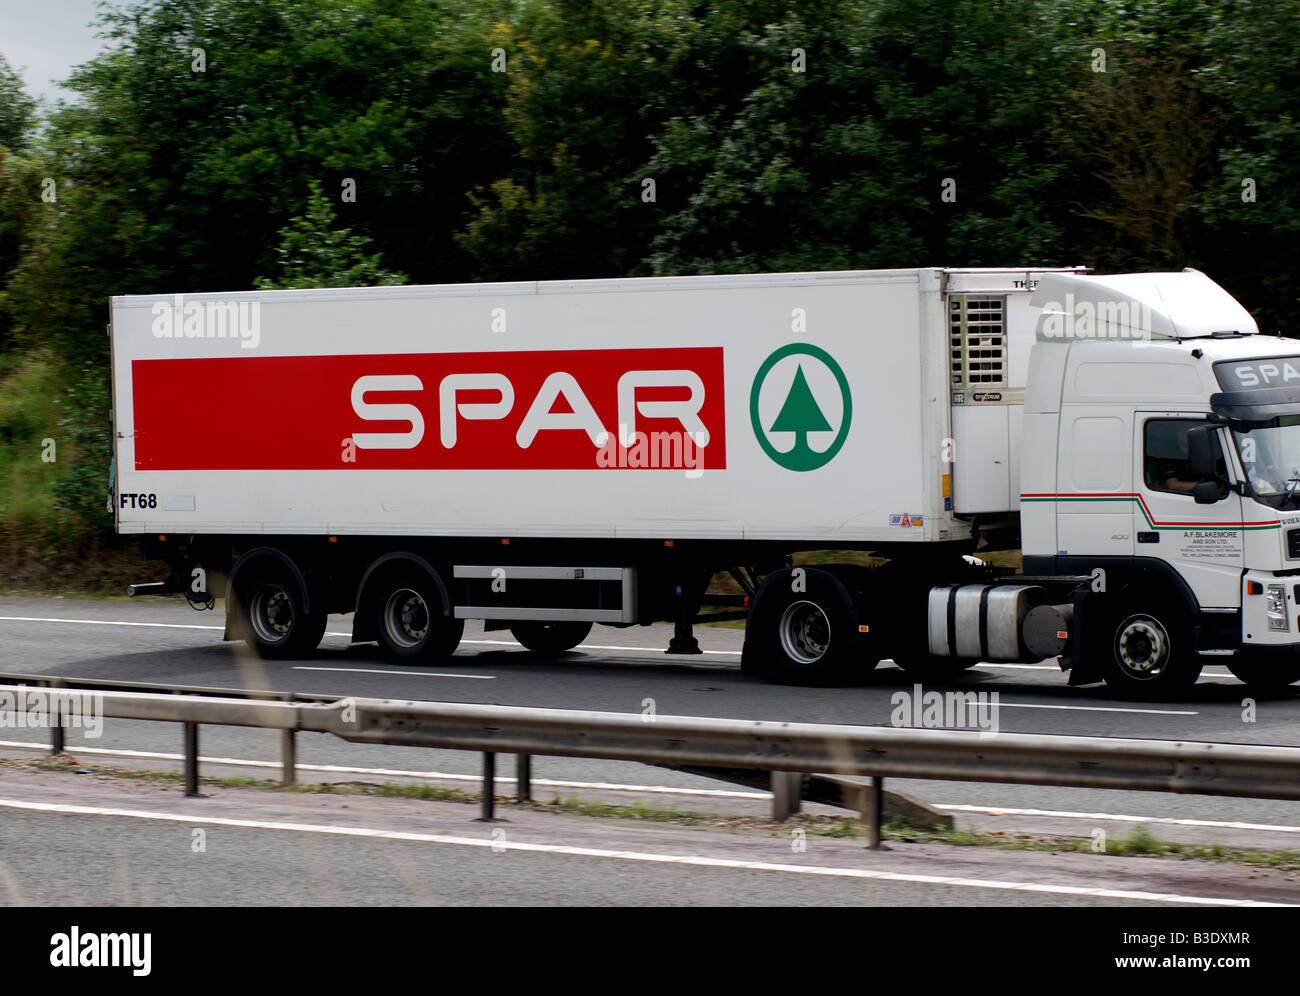 Spar lorry on M40 motorway England UK Stock Photo